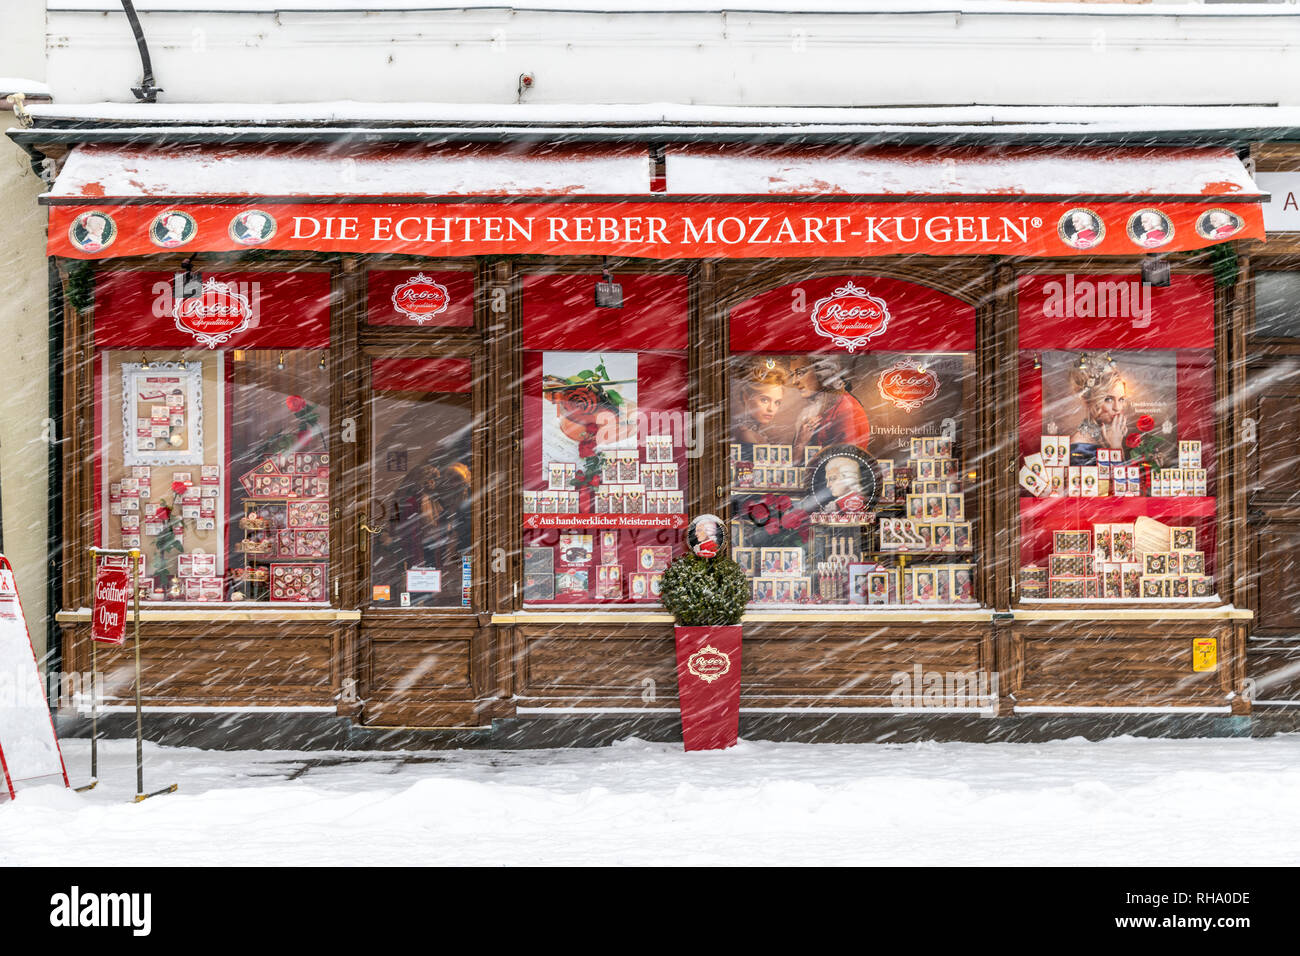 The historical and famous Echten Reber Mozart Kugeln chocolate shop in a snow day, Alter Markt Square, Salzburg, Austria Stock Photo